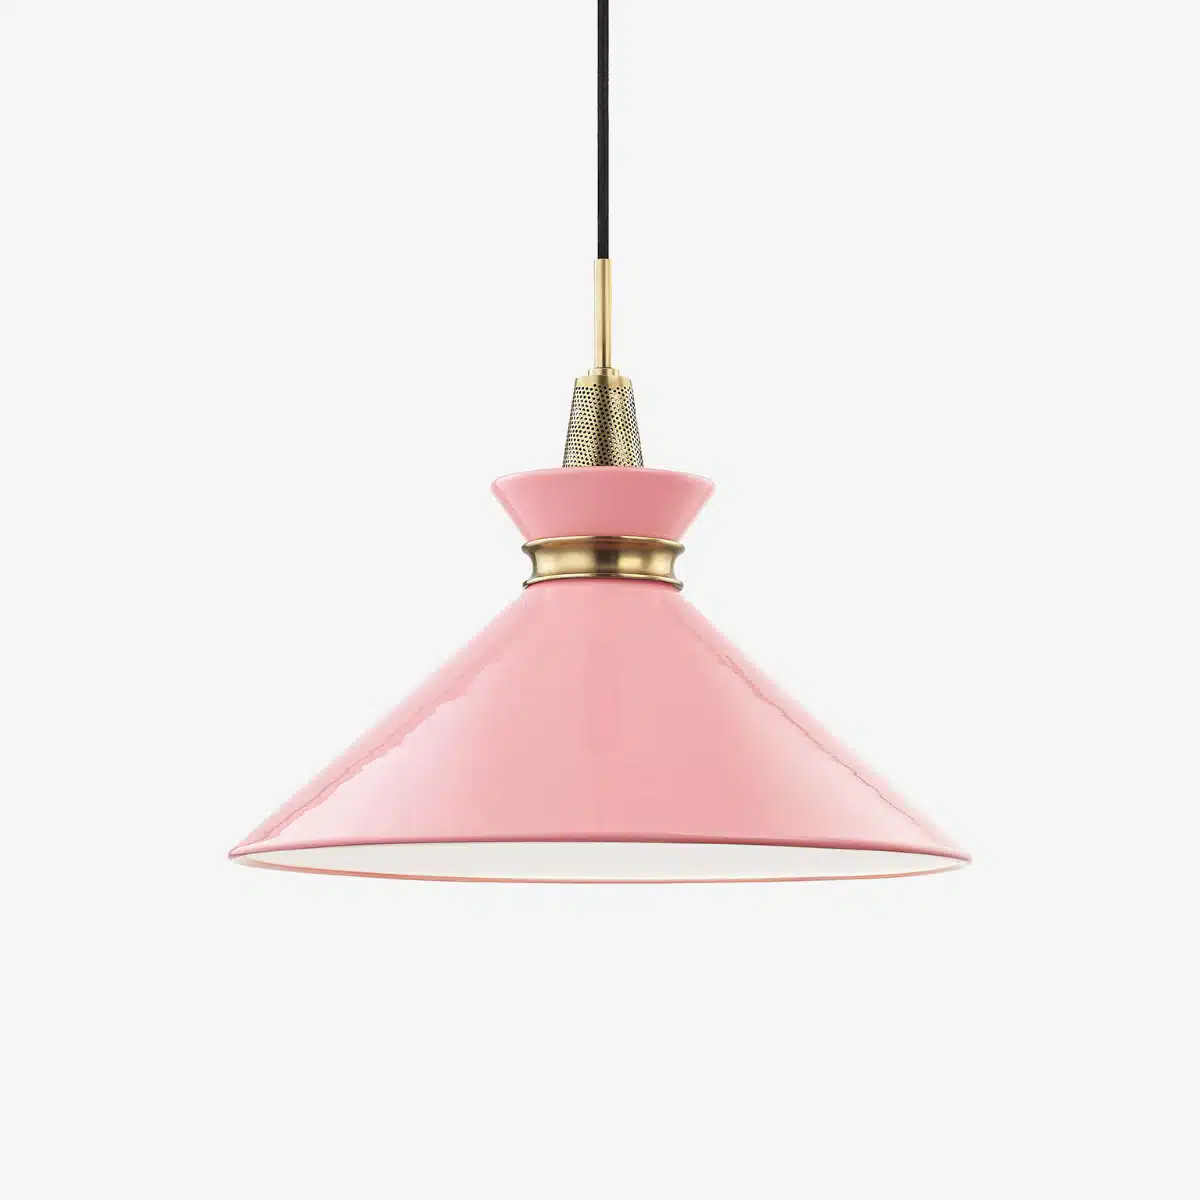 Pink pendant light isolated on white background.